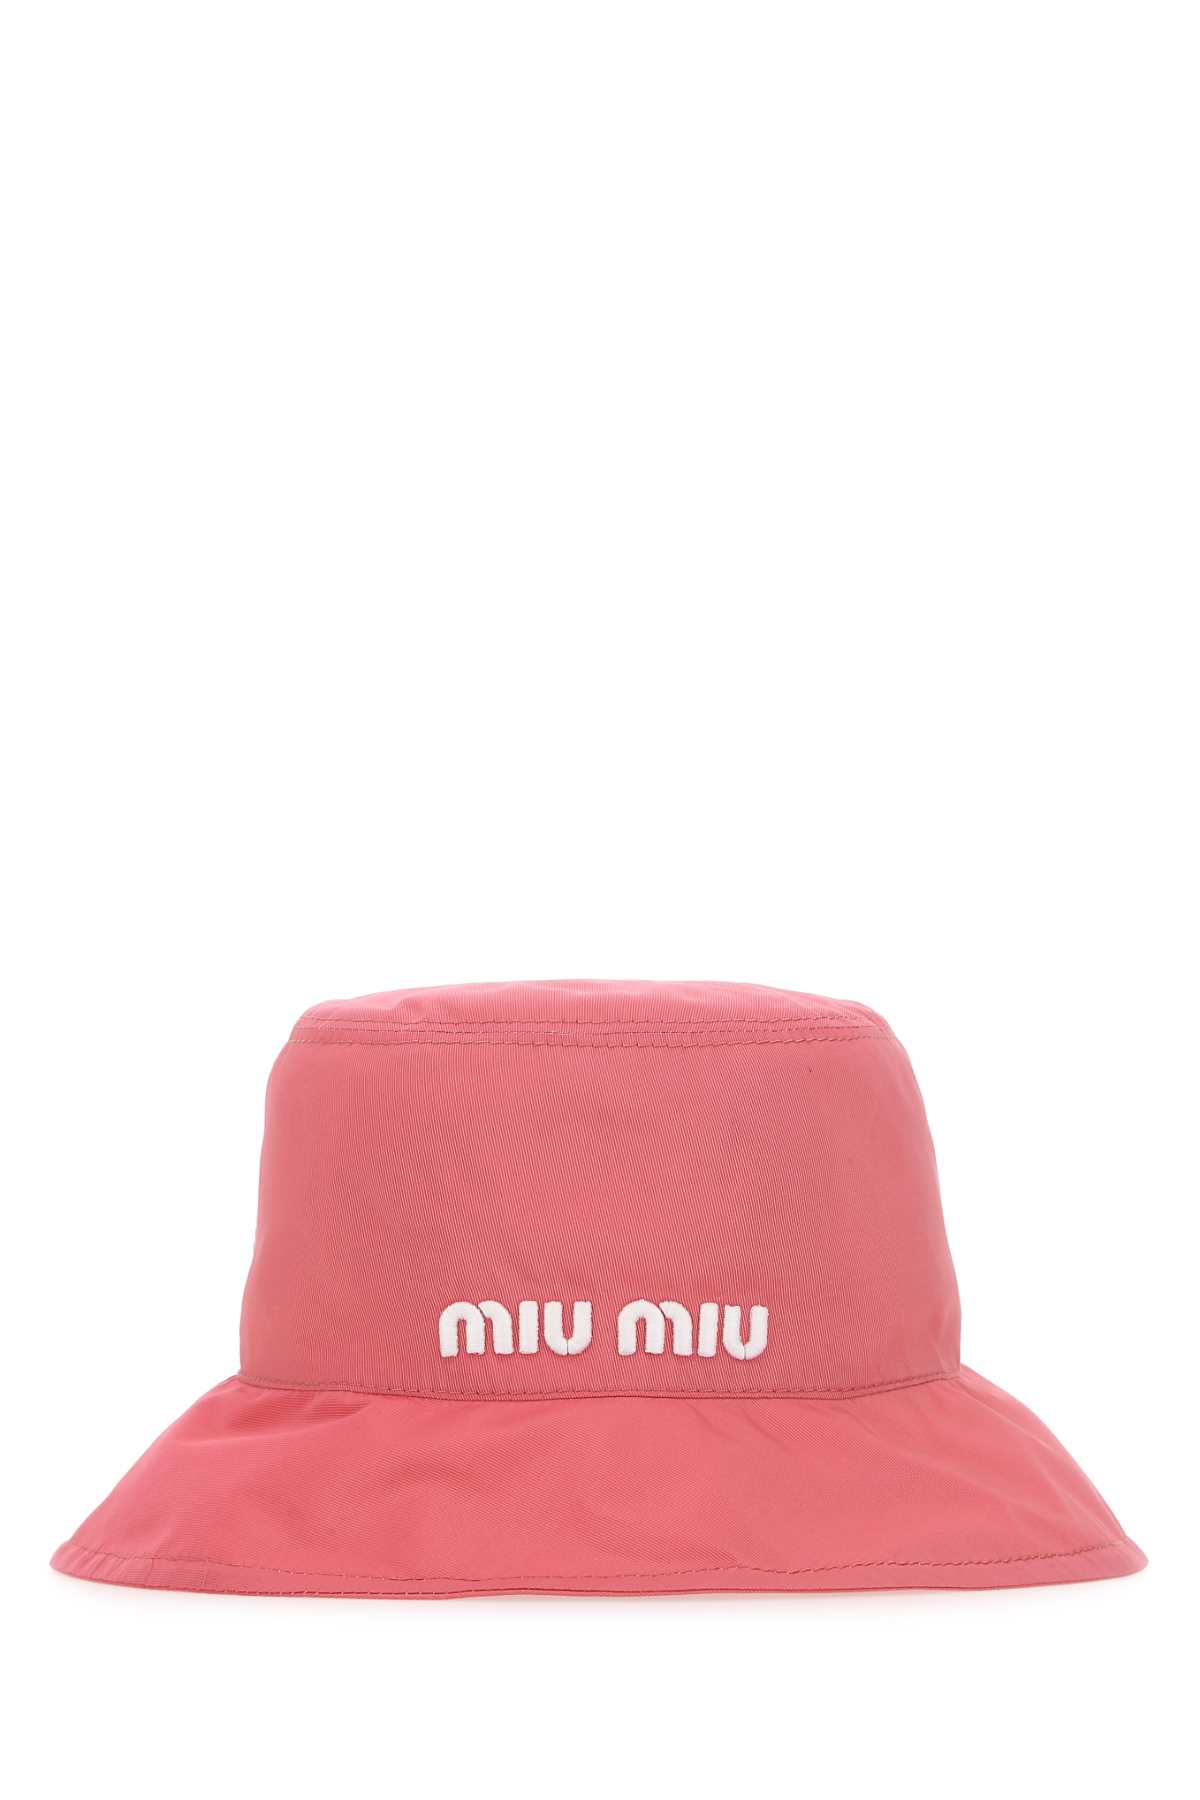 MIU MIU PINK POLYESTER BLEND HAT